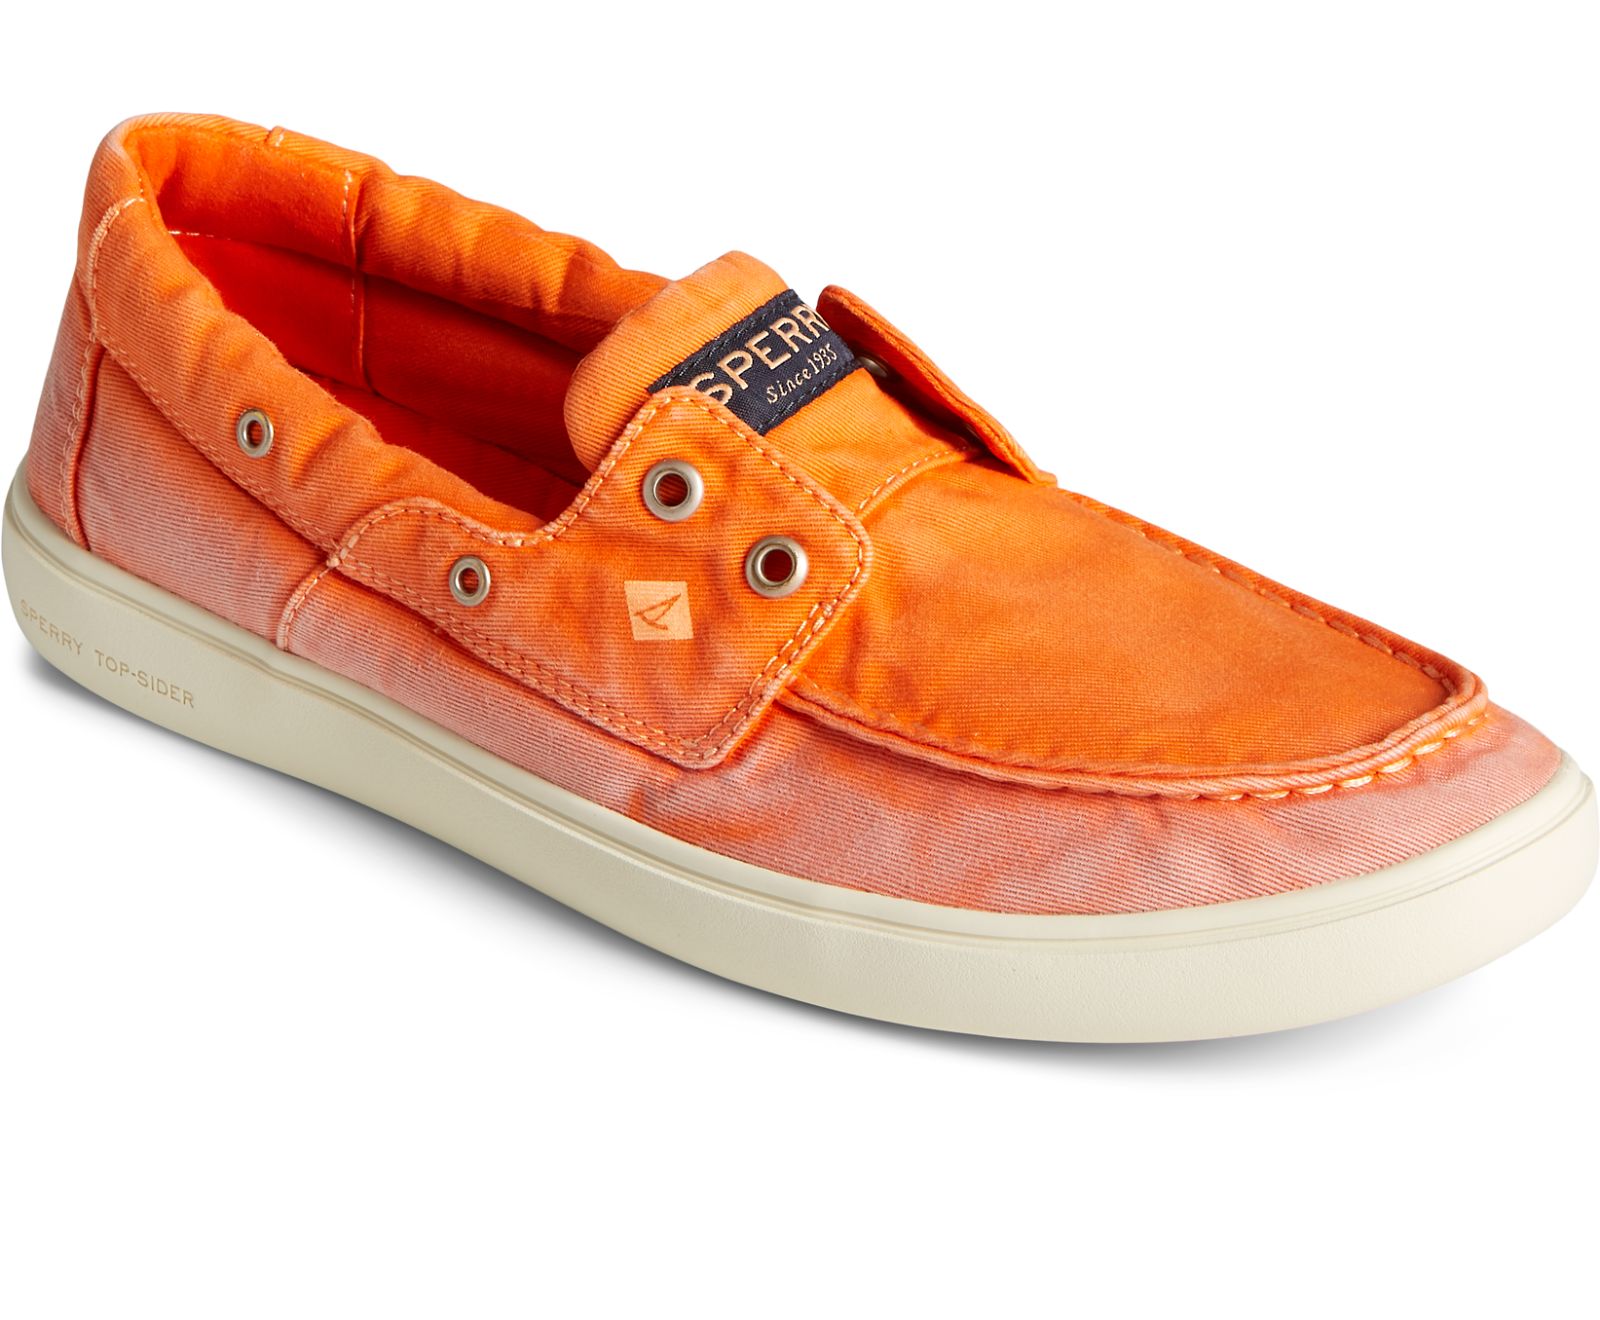 Men's Outer Banks 2-Eye Twill Boat Shoe - Orange